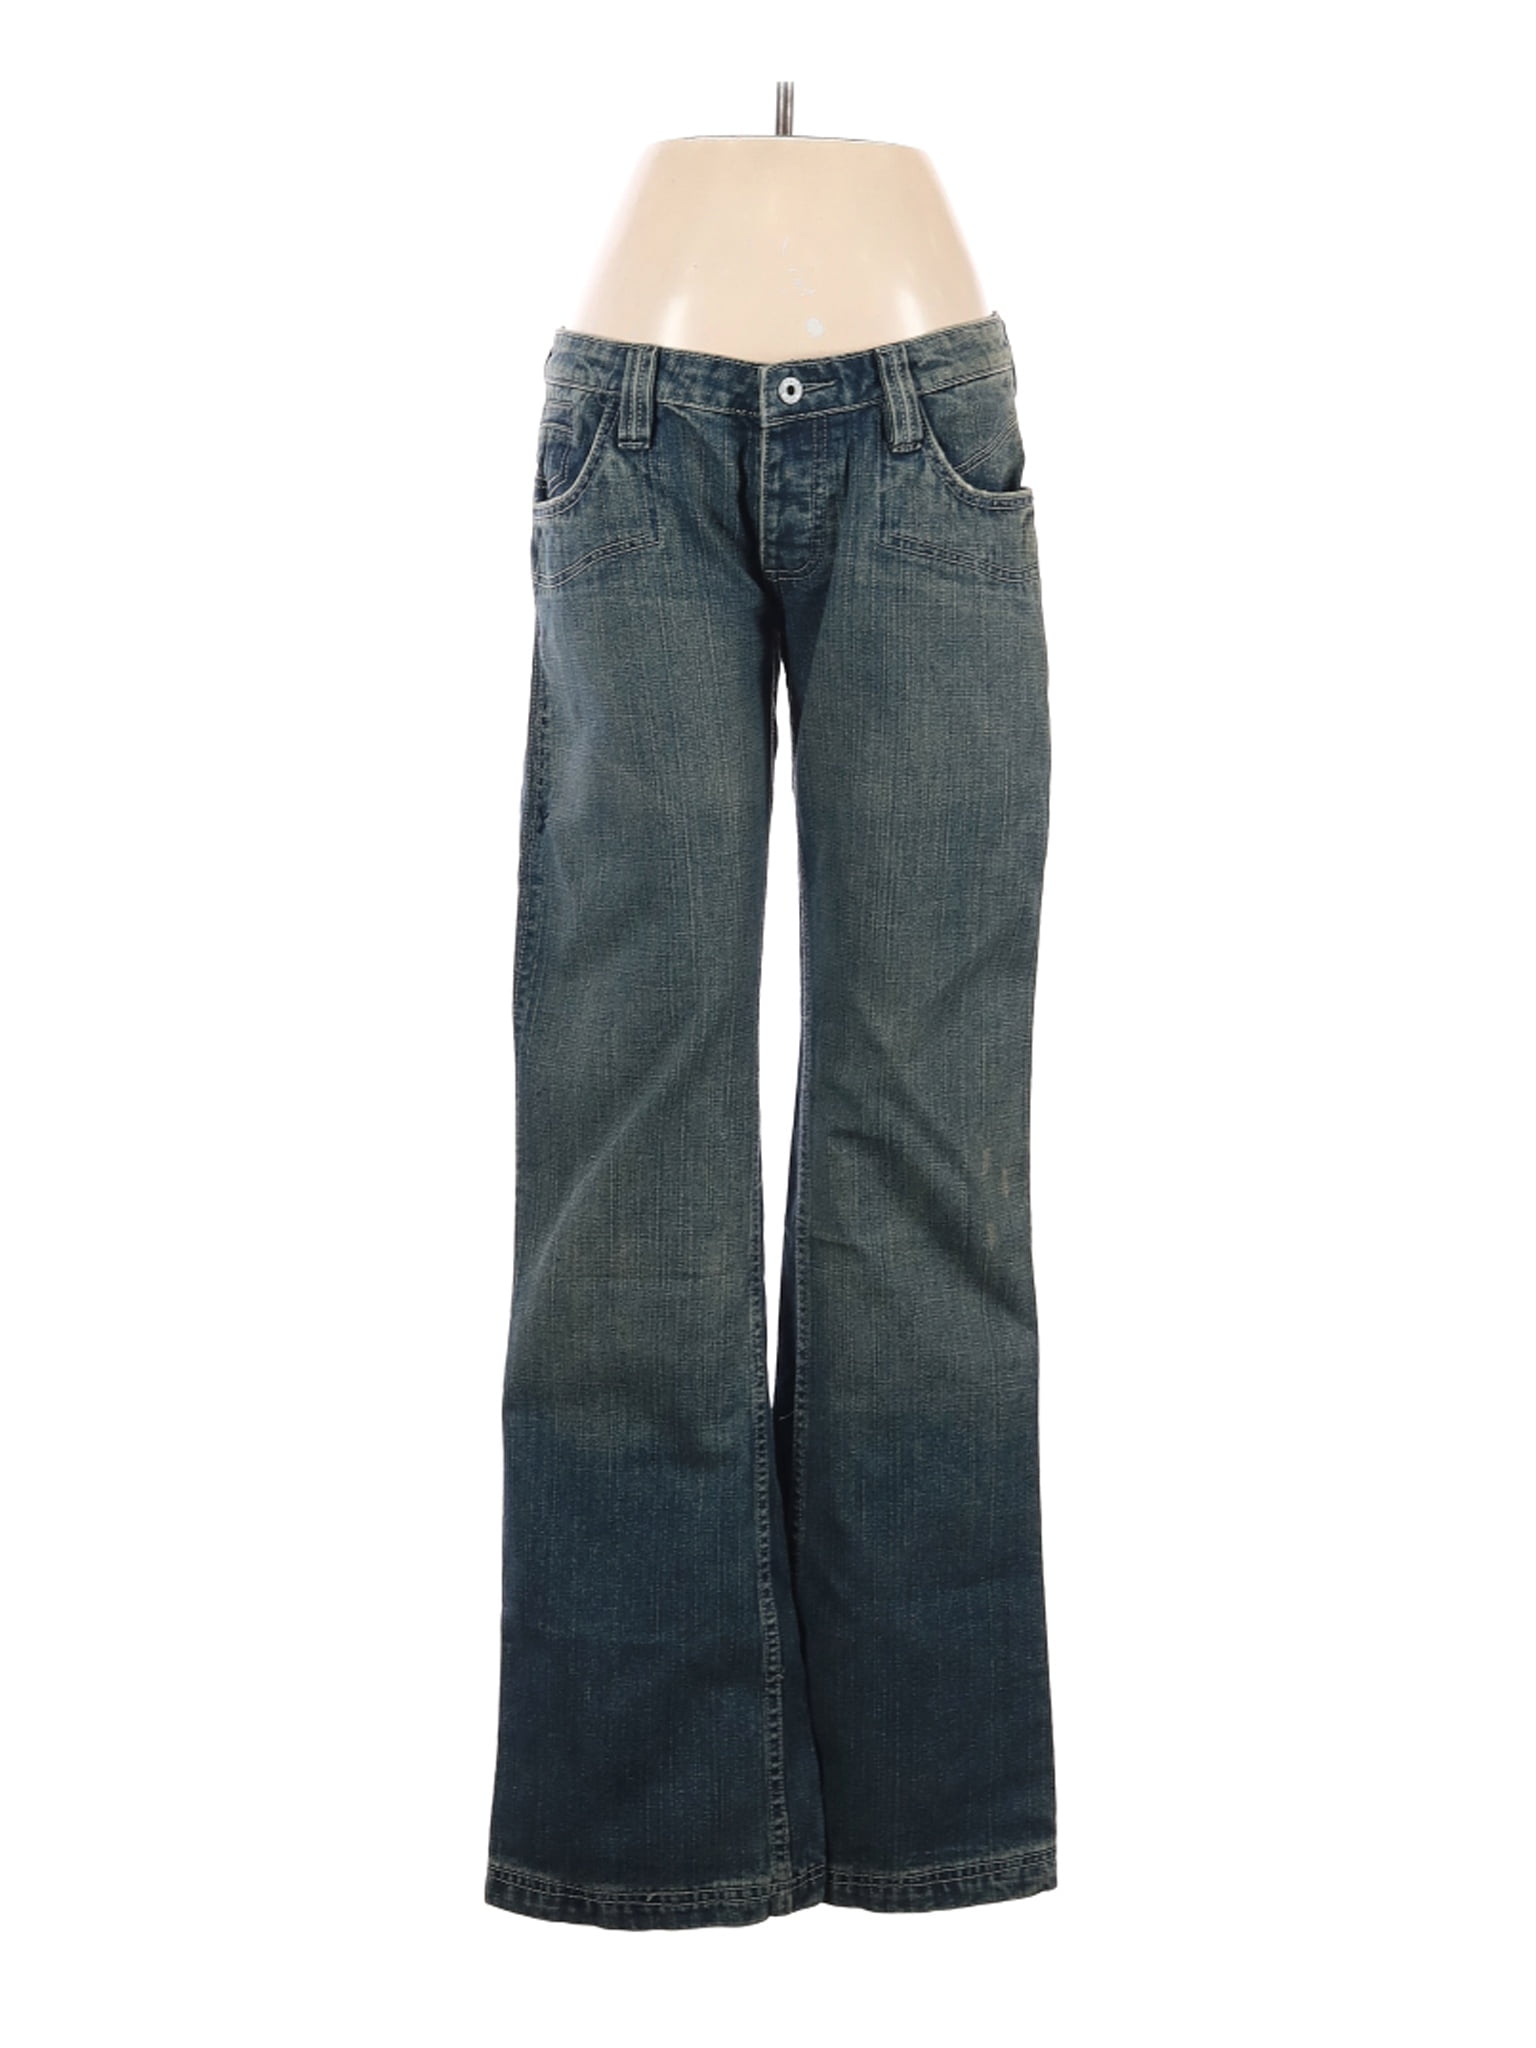 Denim - Pre-Owned Antik Denim Women's Size 31W Jeans - Walmart.com - Walmart.com